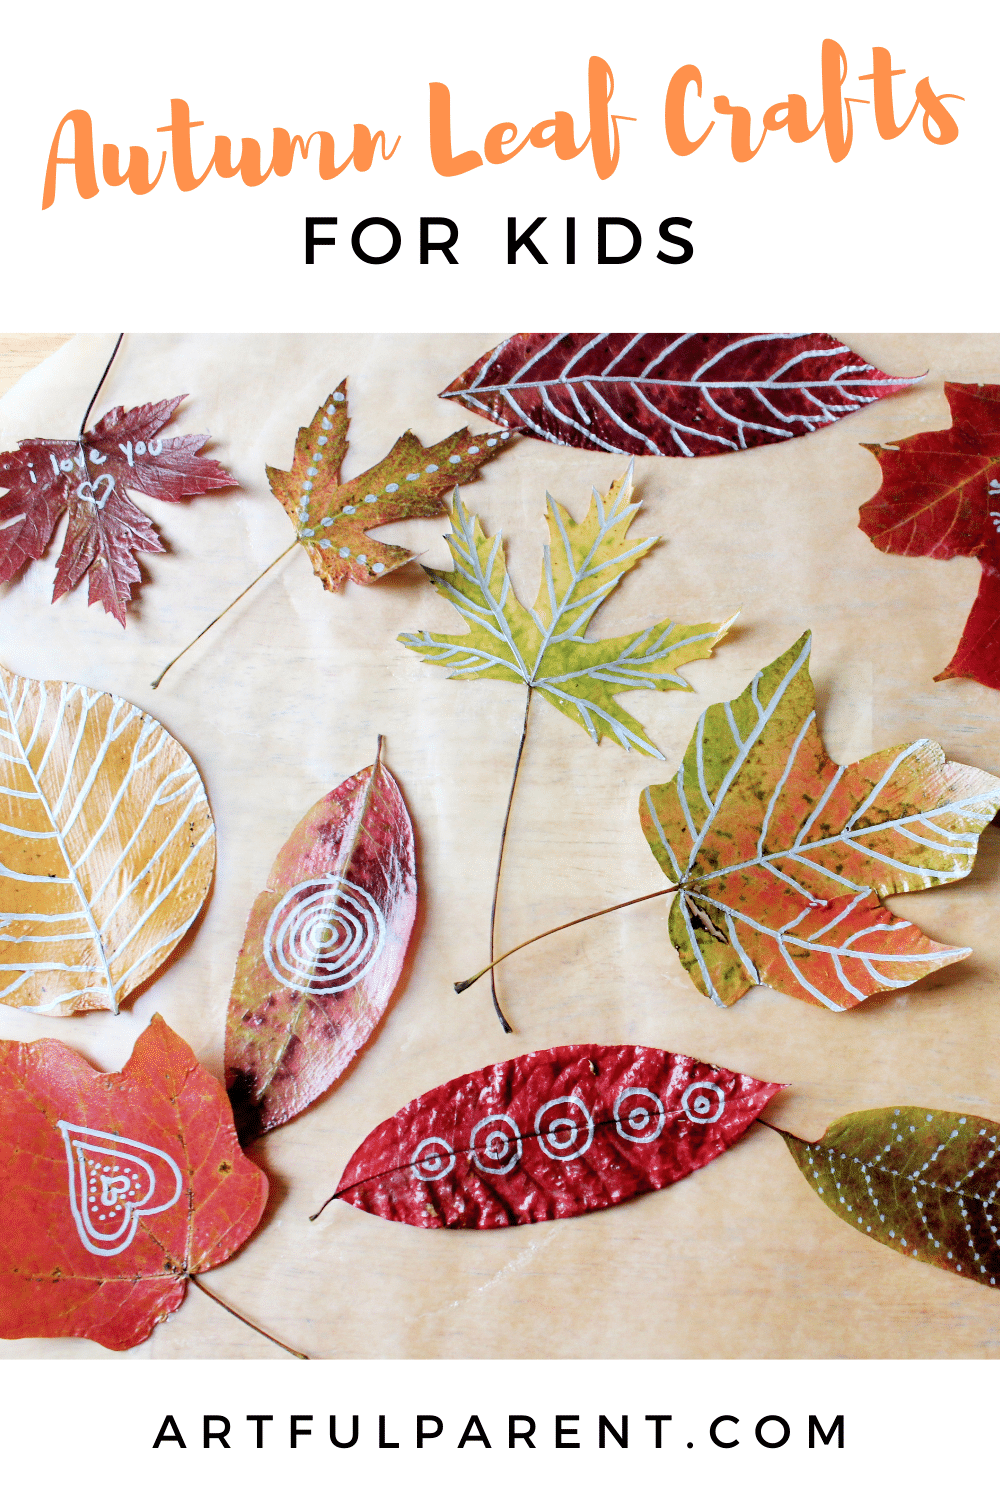 10 Autumn Leaf Crafts Ideas for Kids